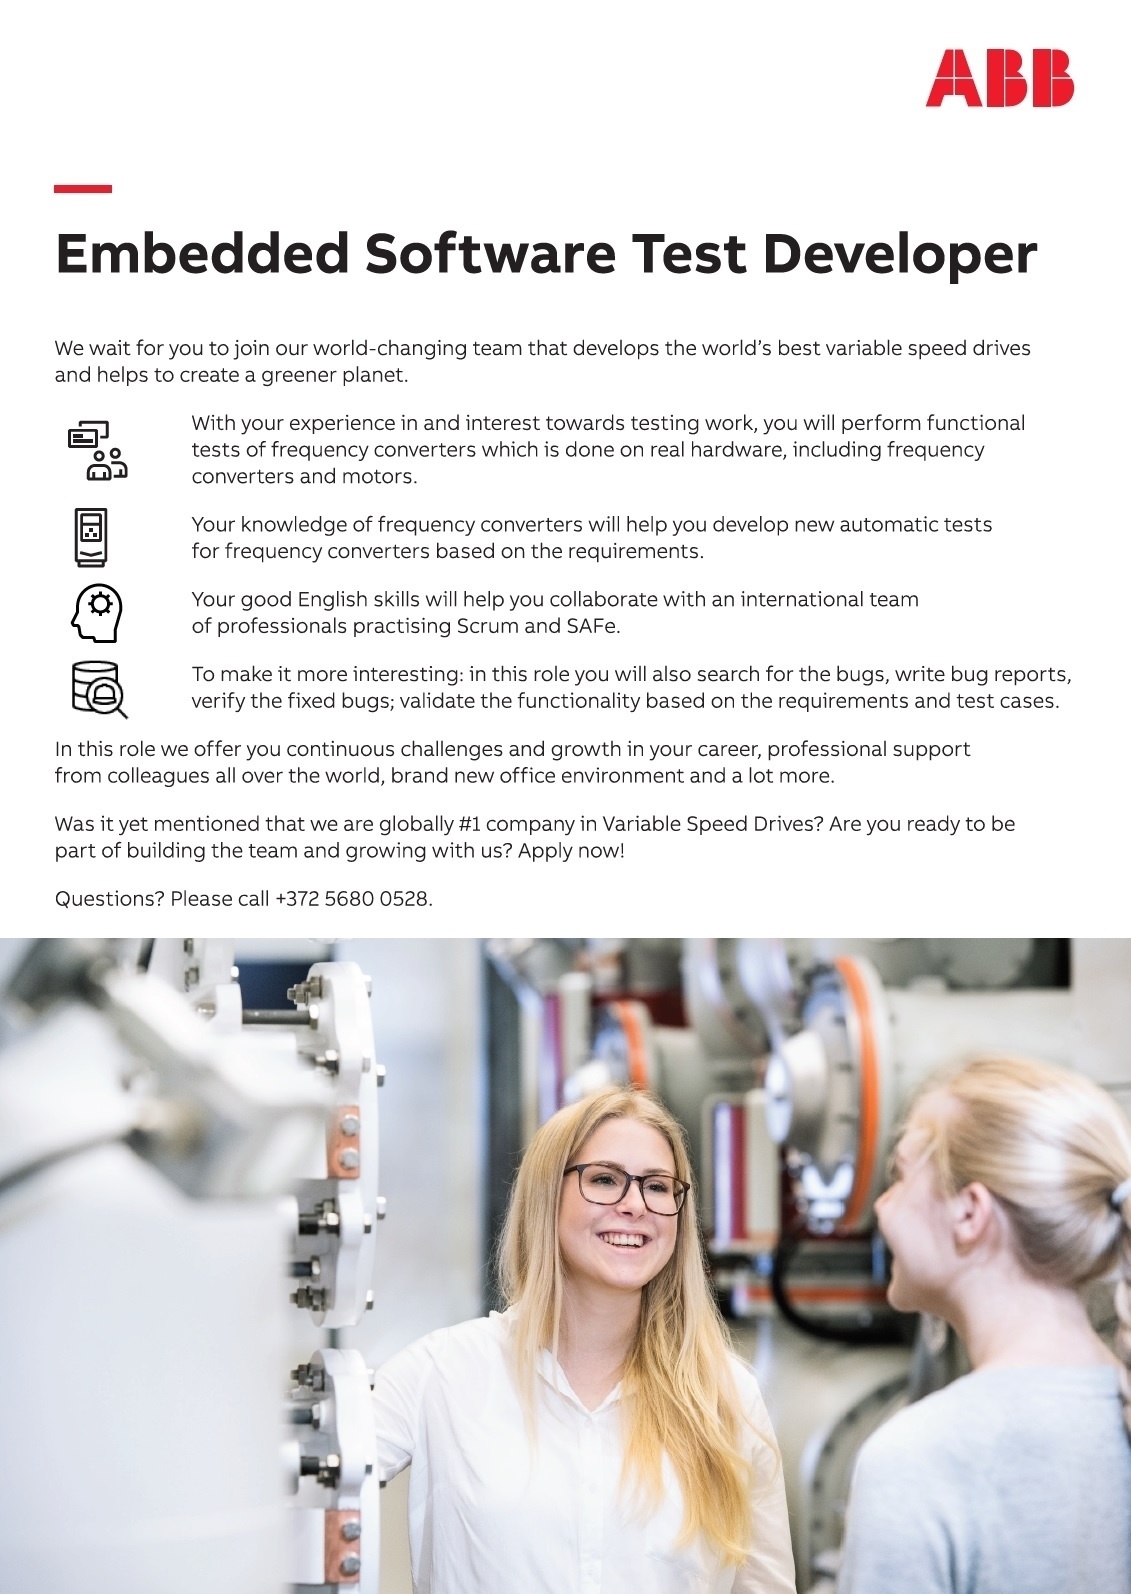 ABB AS Embedded Software Test Developer